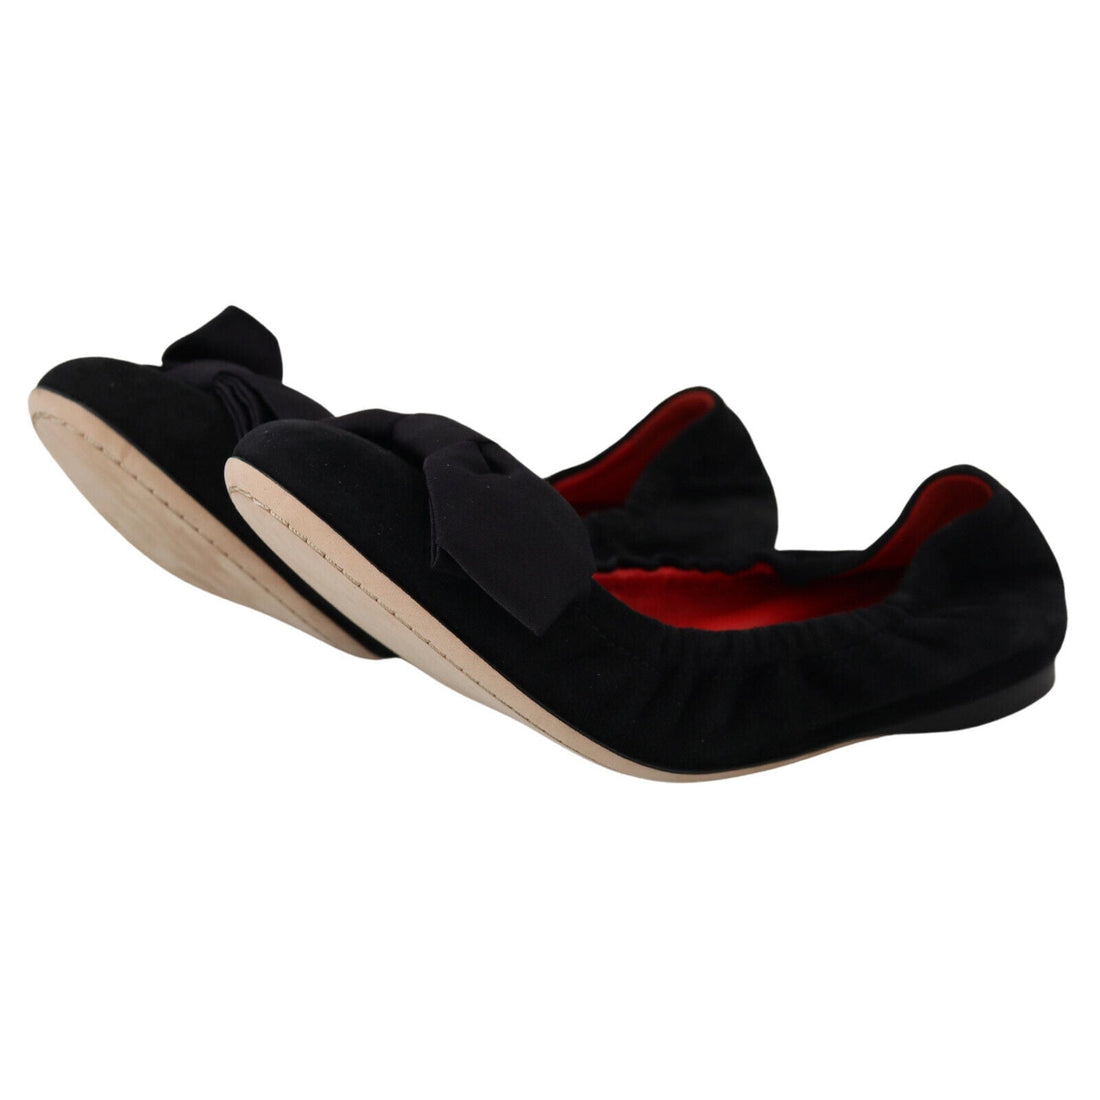 Dolce & Gabbana Black Suede Flat Slip On Ballet Shoes